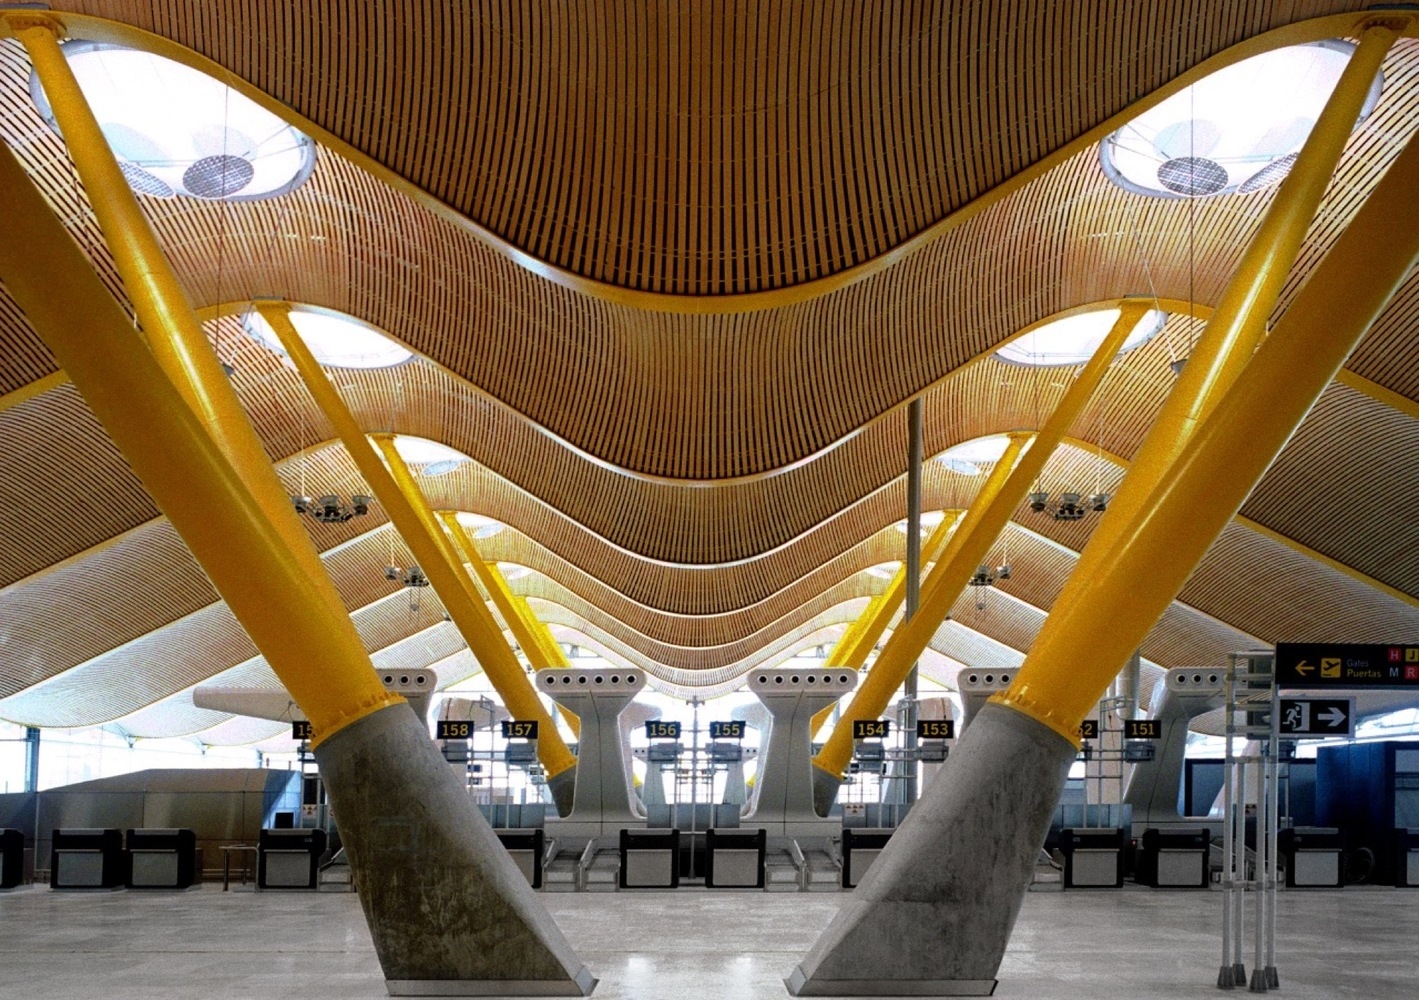 Madrid-Barajas Airport Terminal 4 / Estudio Lamela & Rogers Stirk Harbour + Partners, (image: courtesy of Estudio Lamela+Rogers Stirk Harbour + Partners)